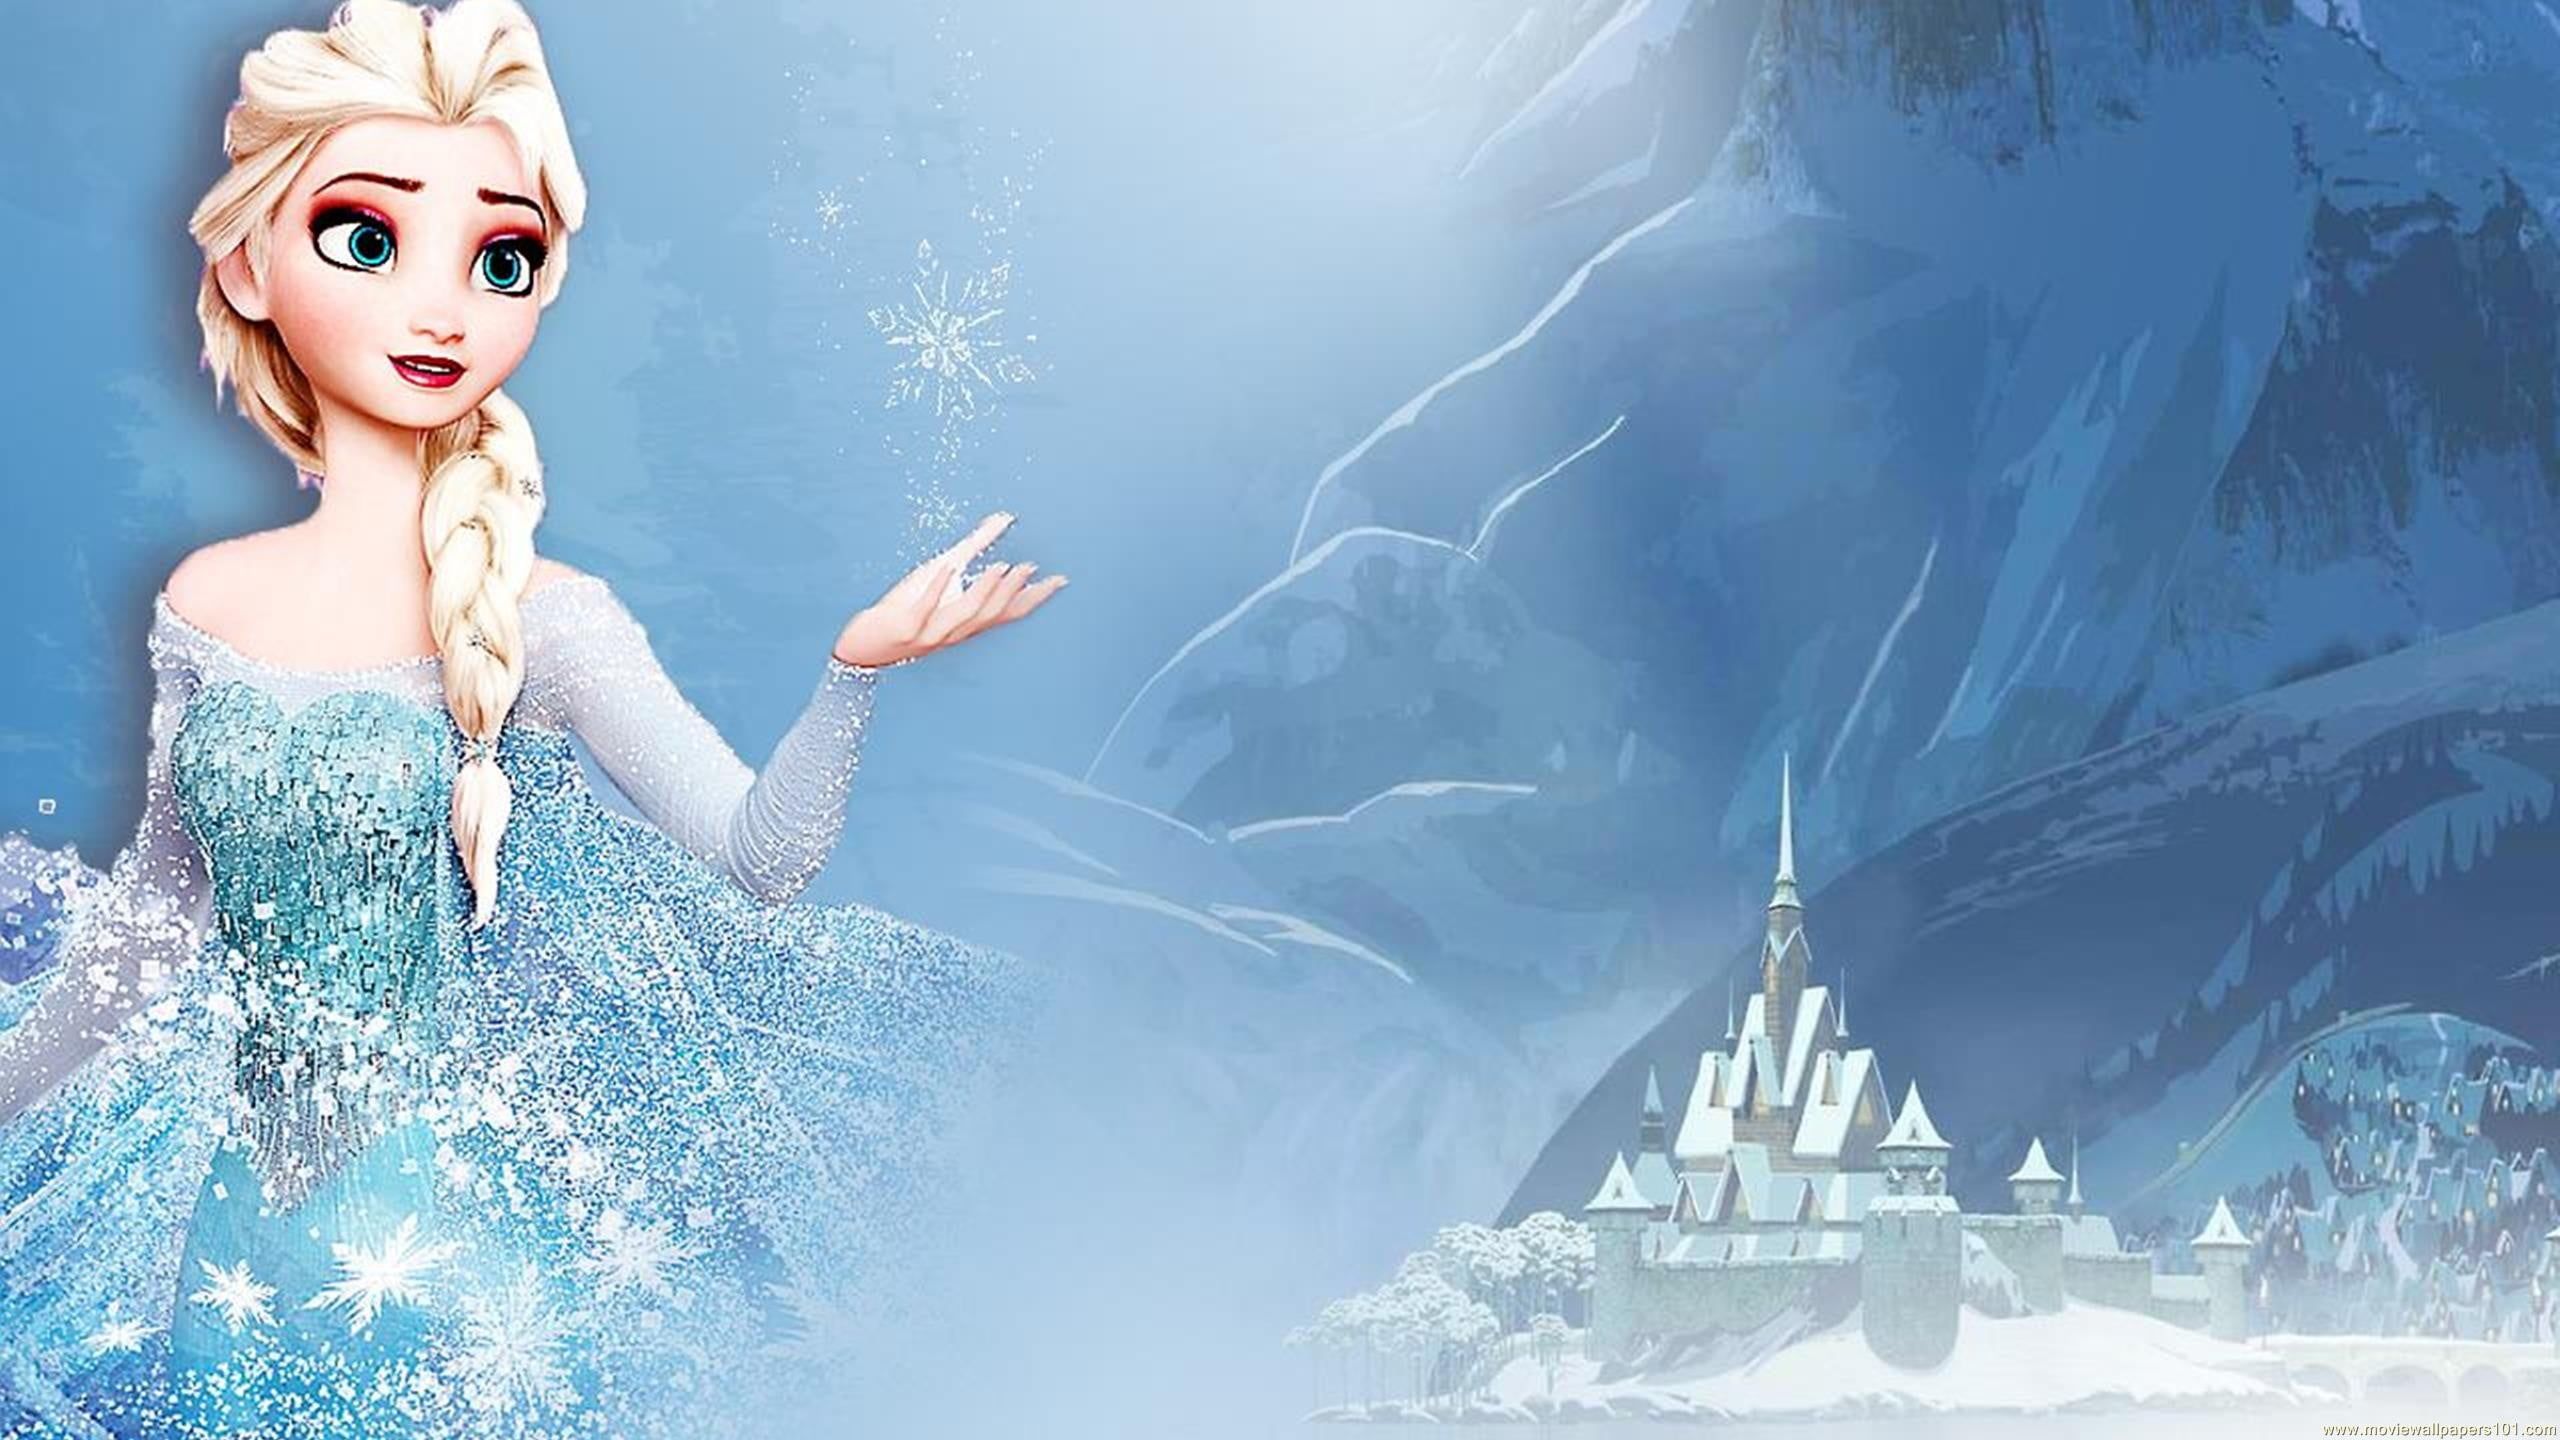 Disney Frozen Queen Elsa digital wallpaper, Princess Elsa, Frozen